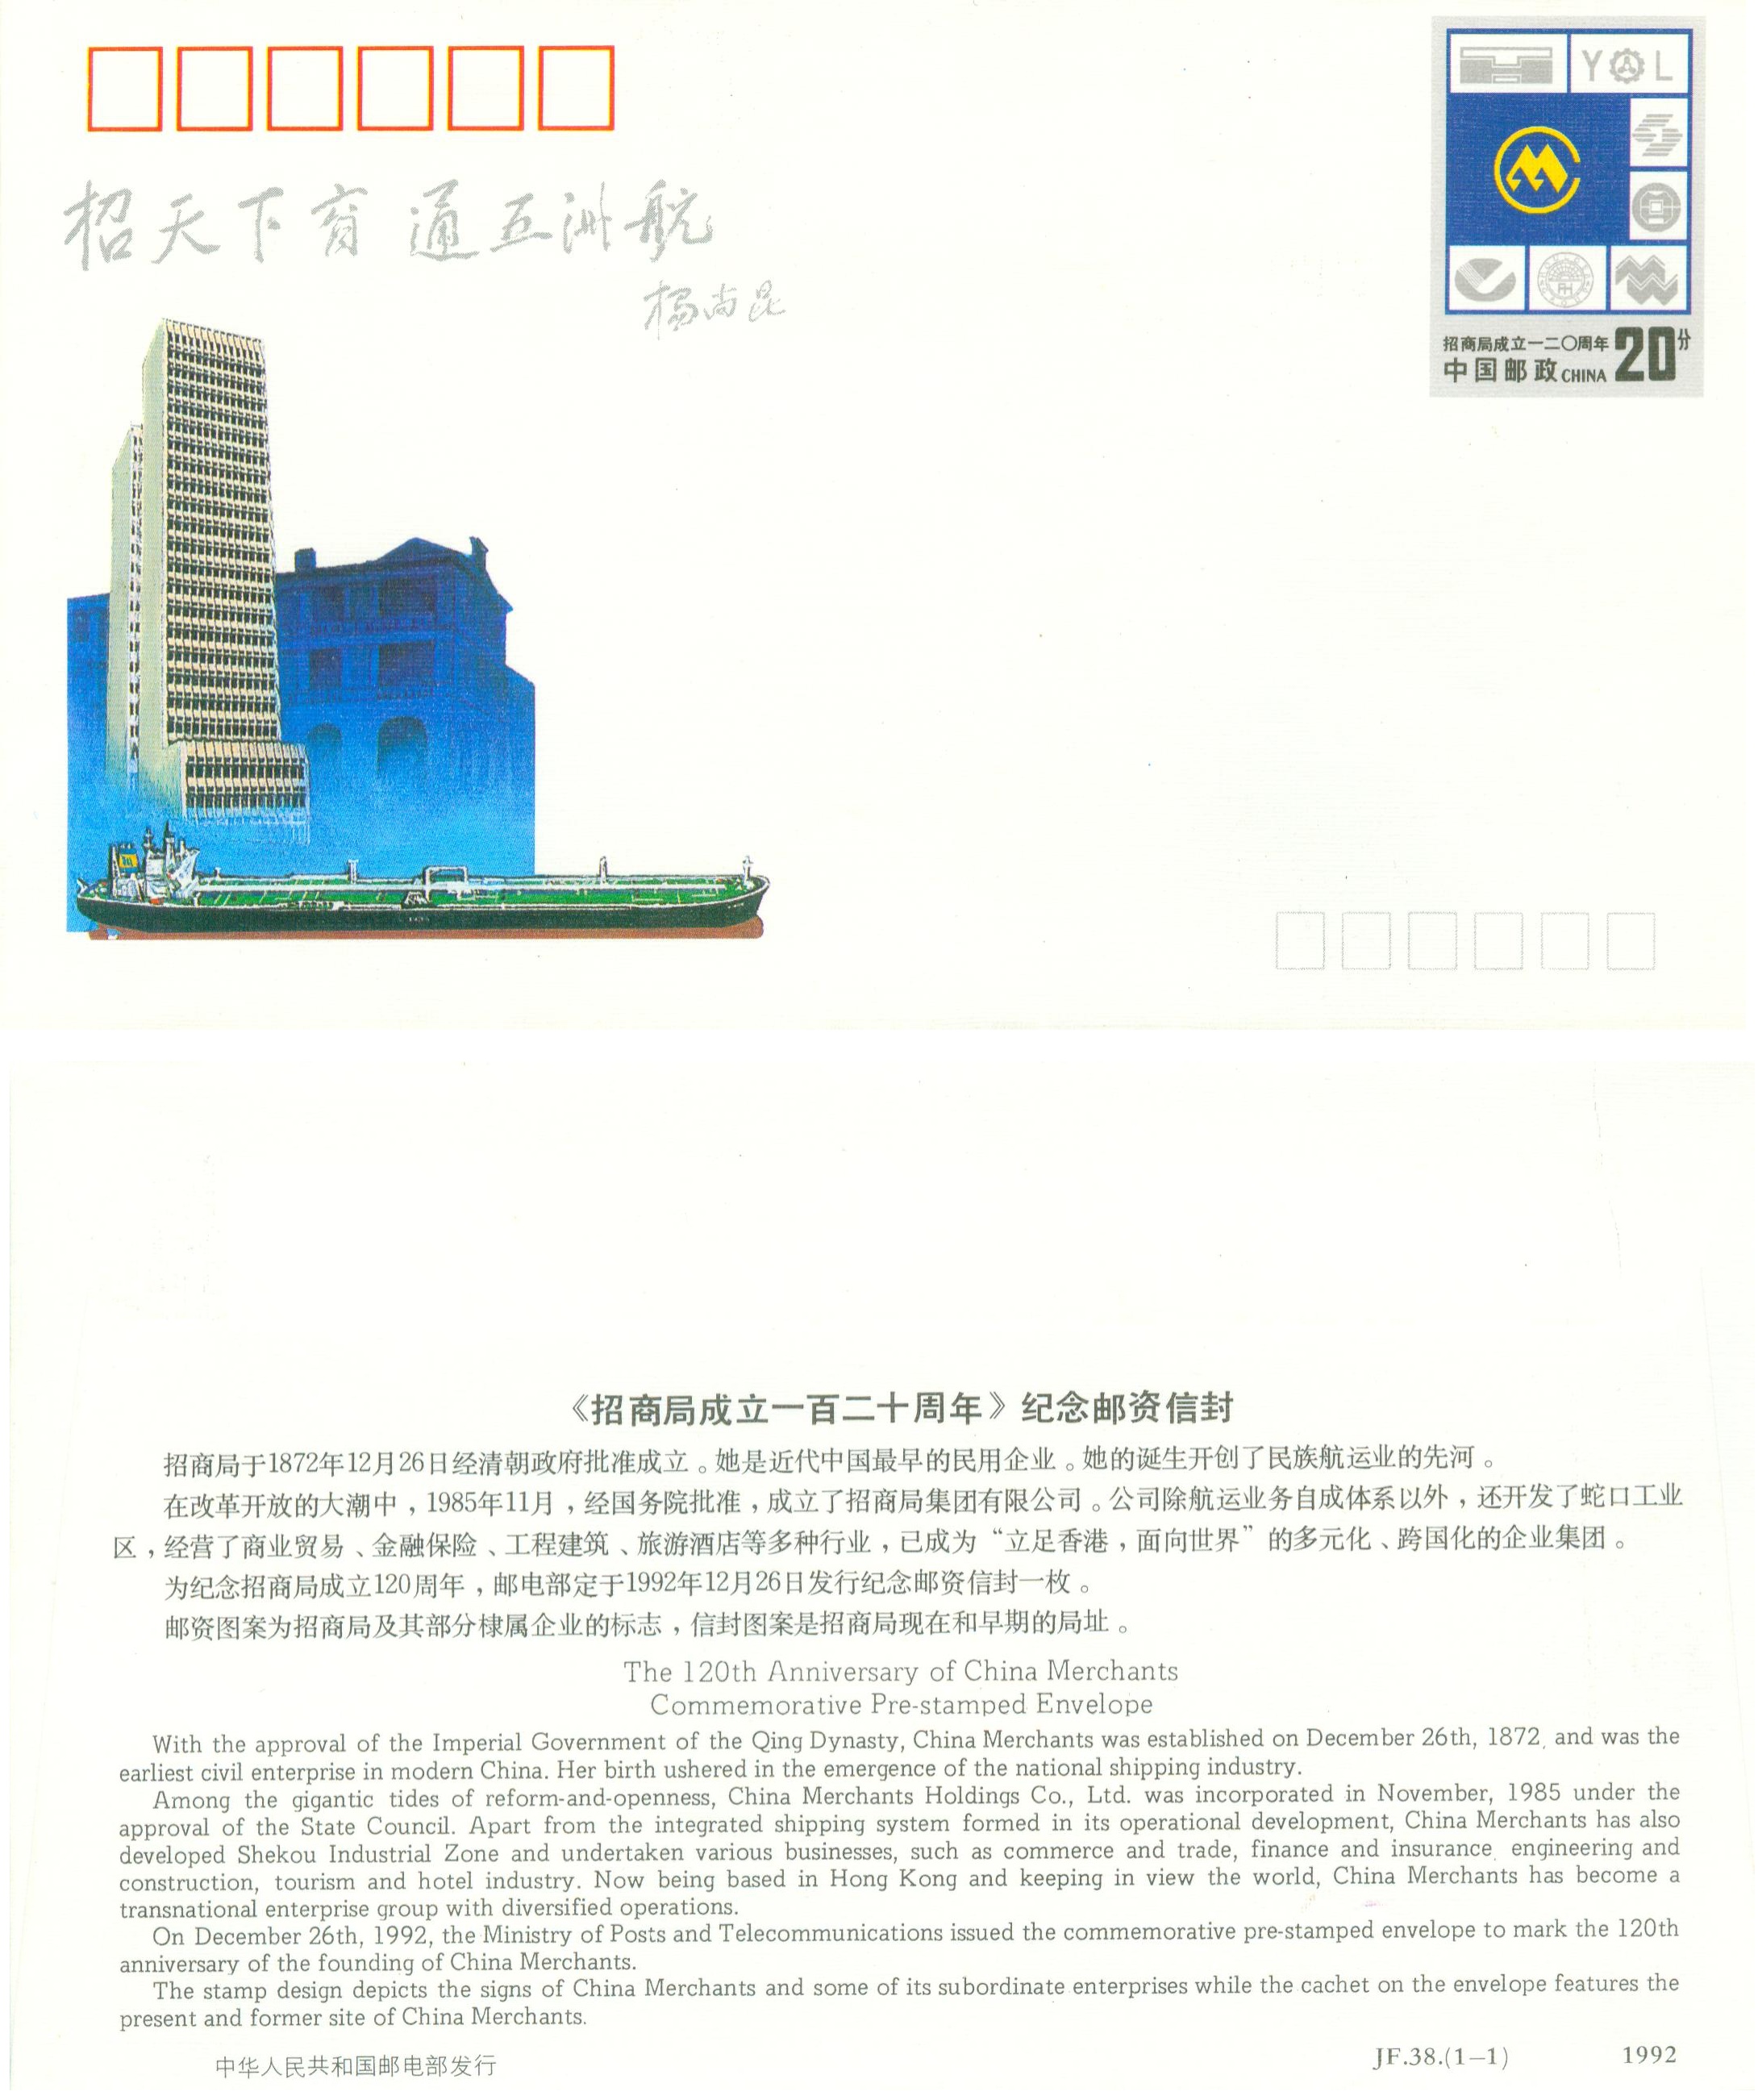 JF38, The 120th Anniversary of China Merchants 1992